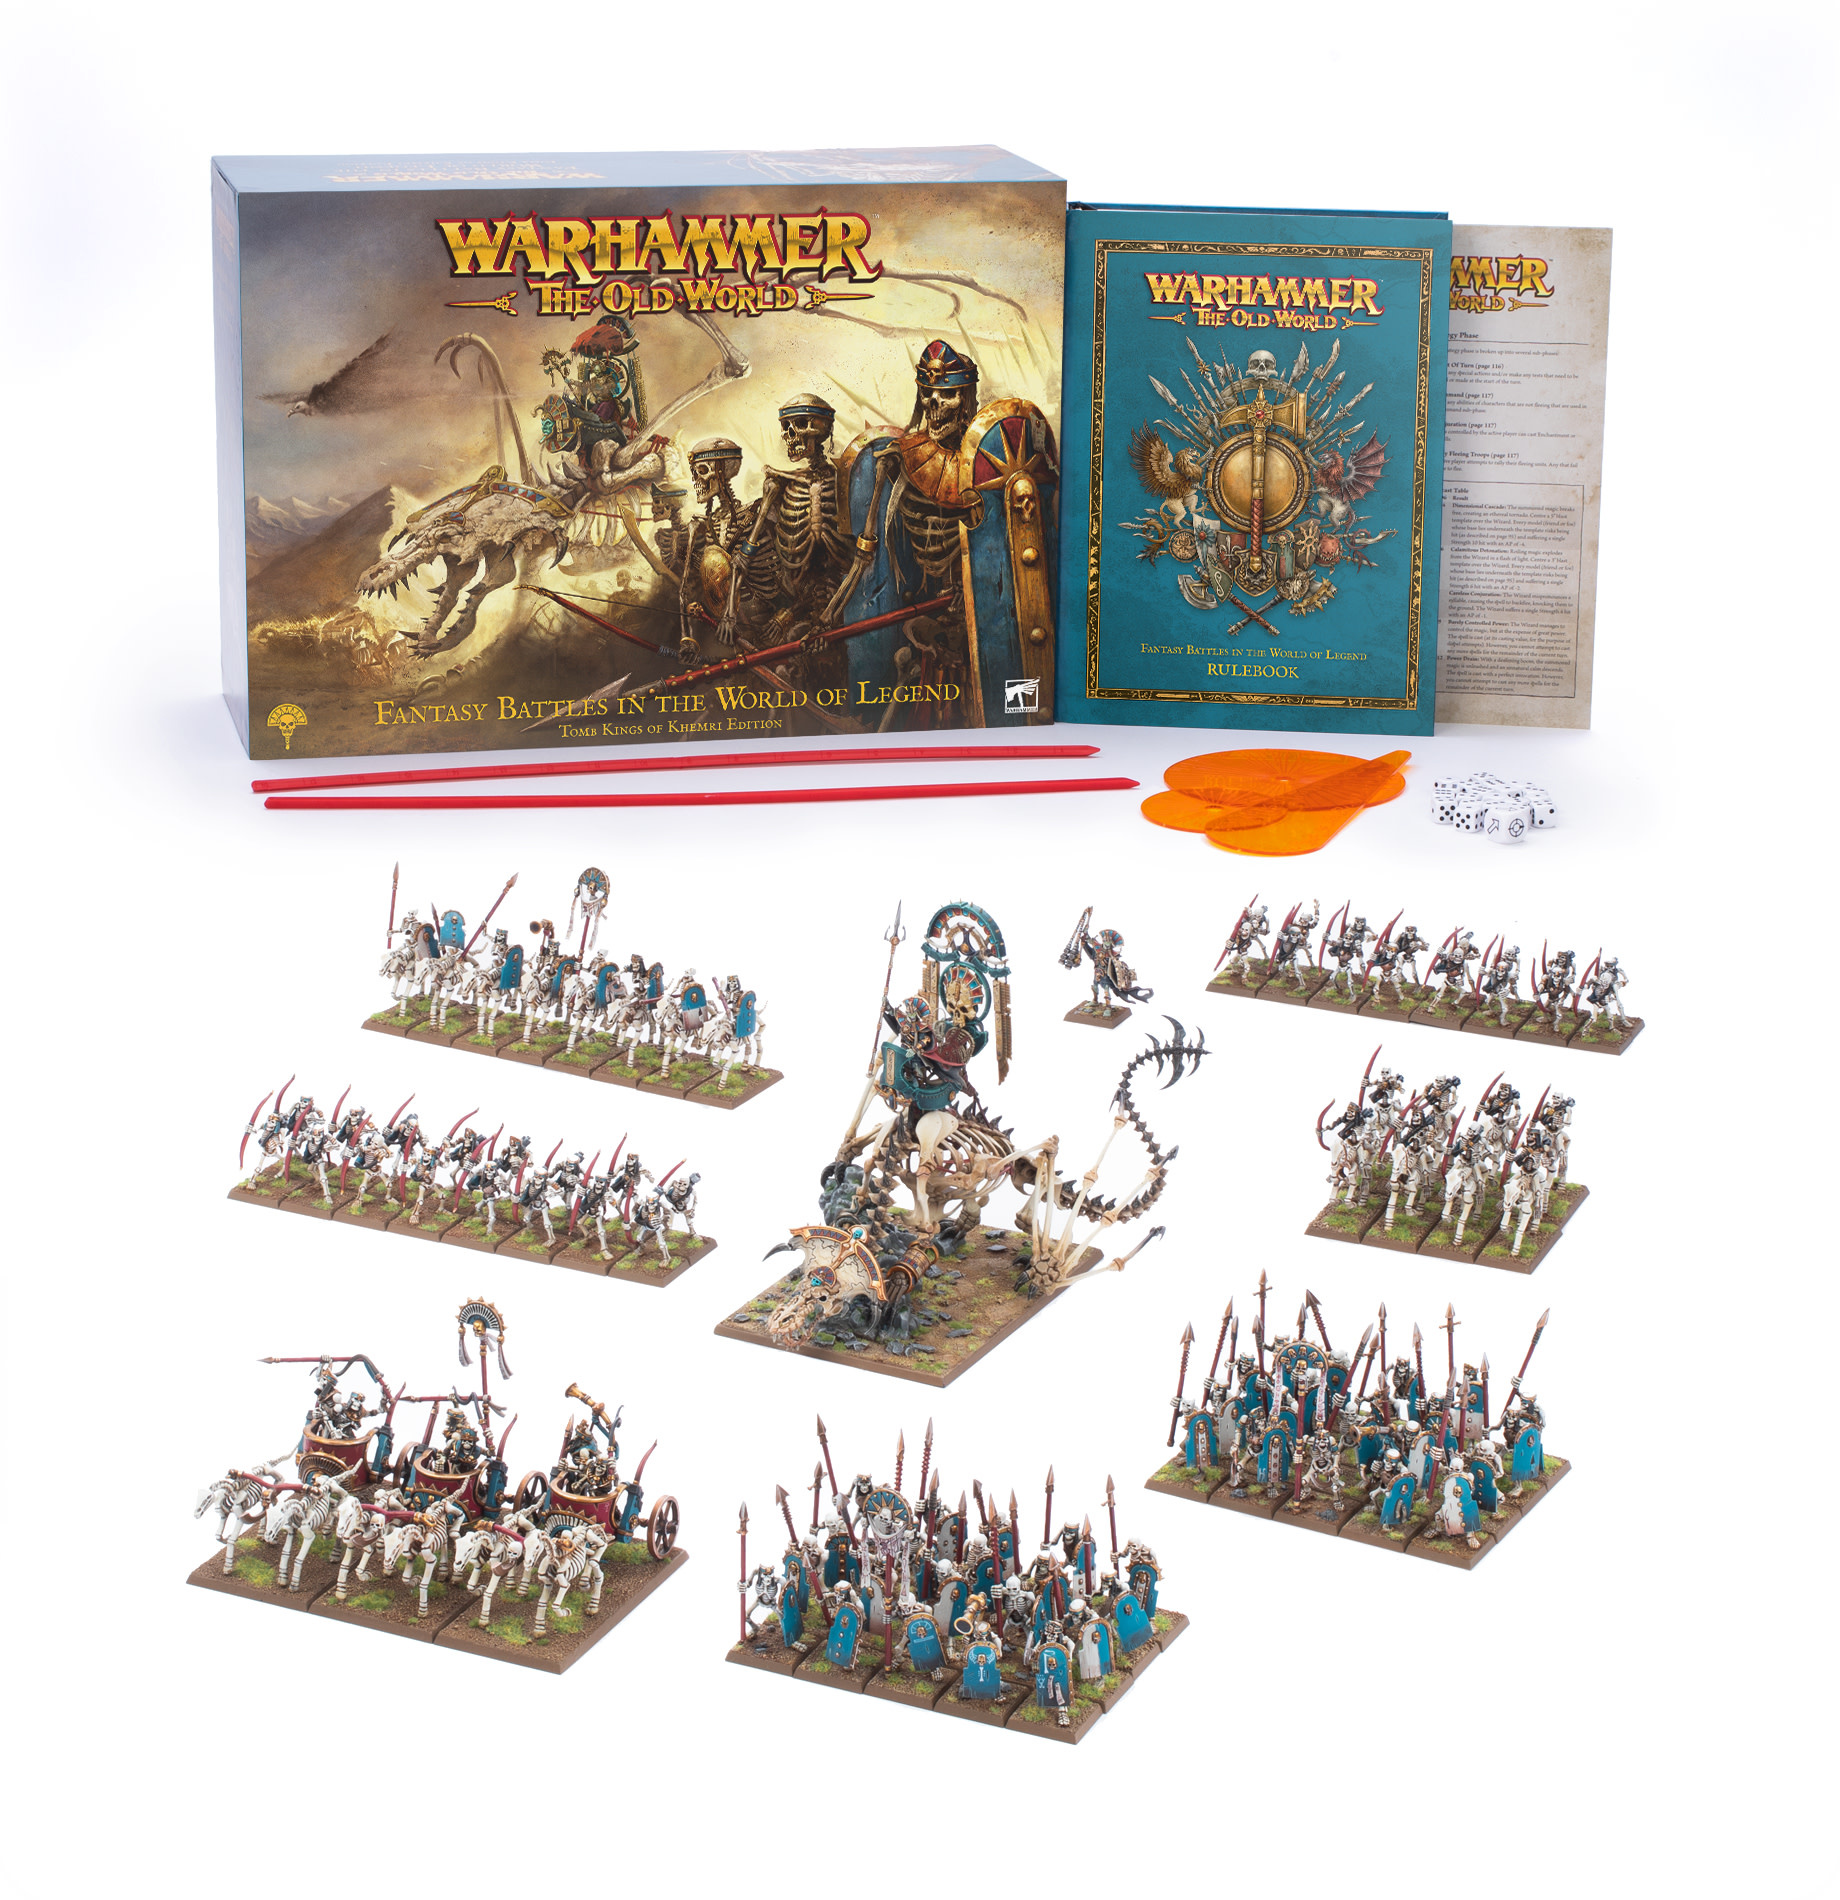 Warhammer: The Old World Core Set - Tomb Kings of Khemri